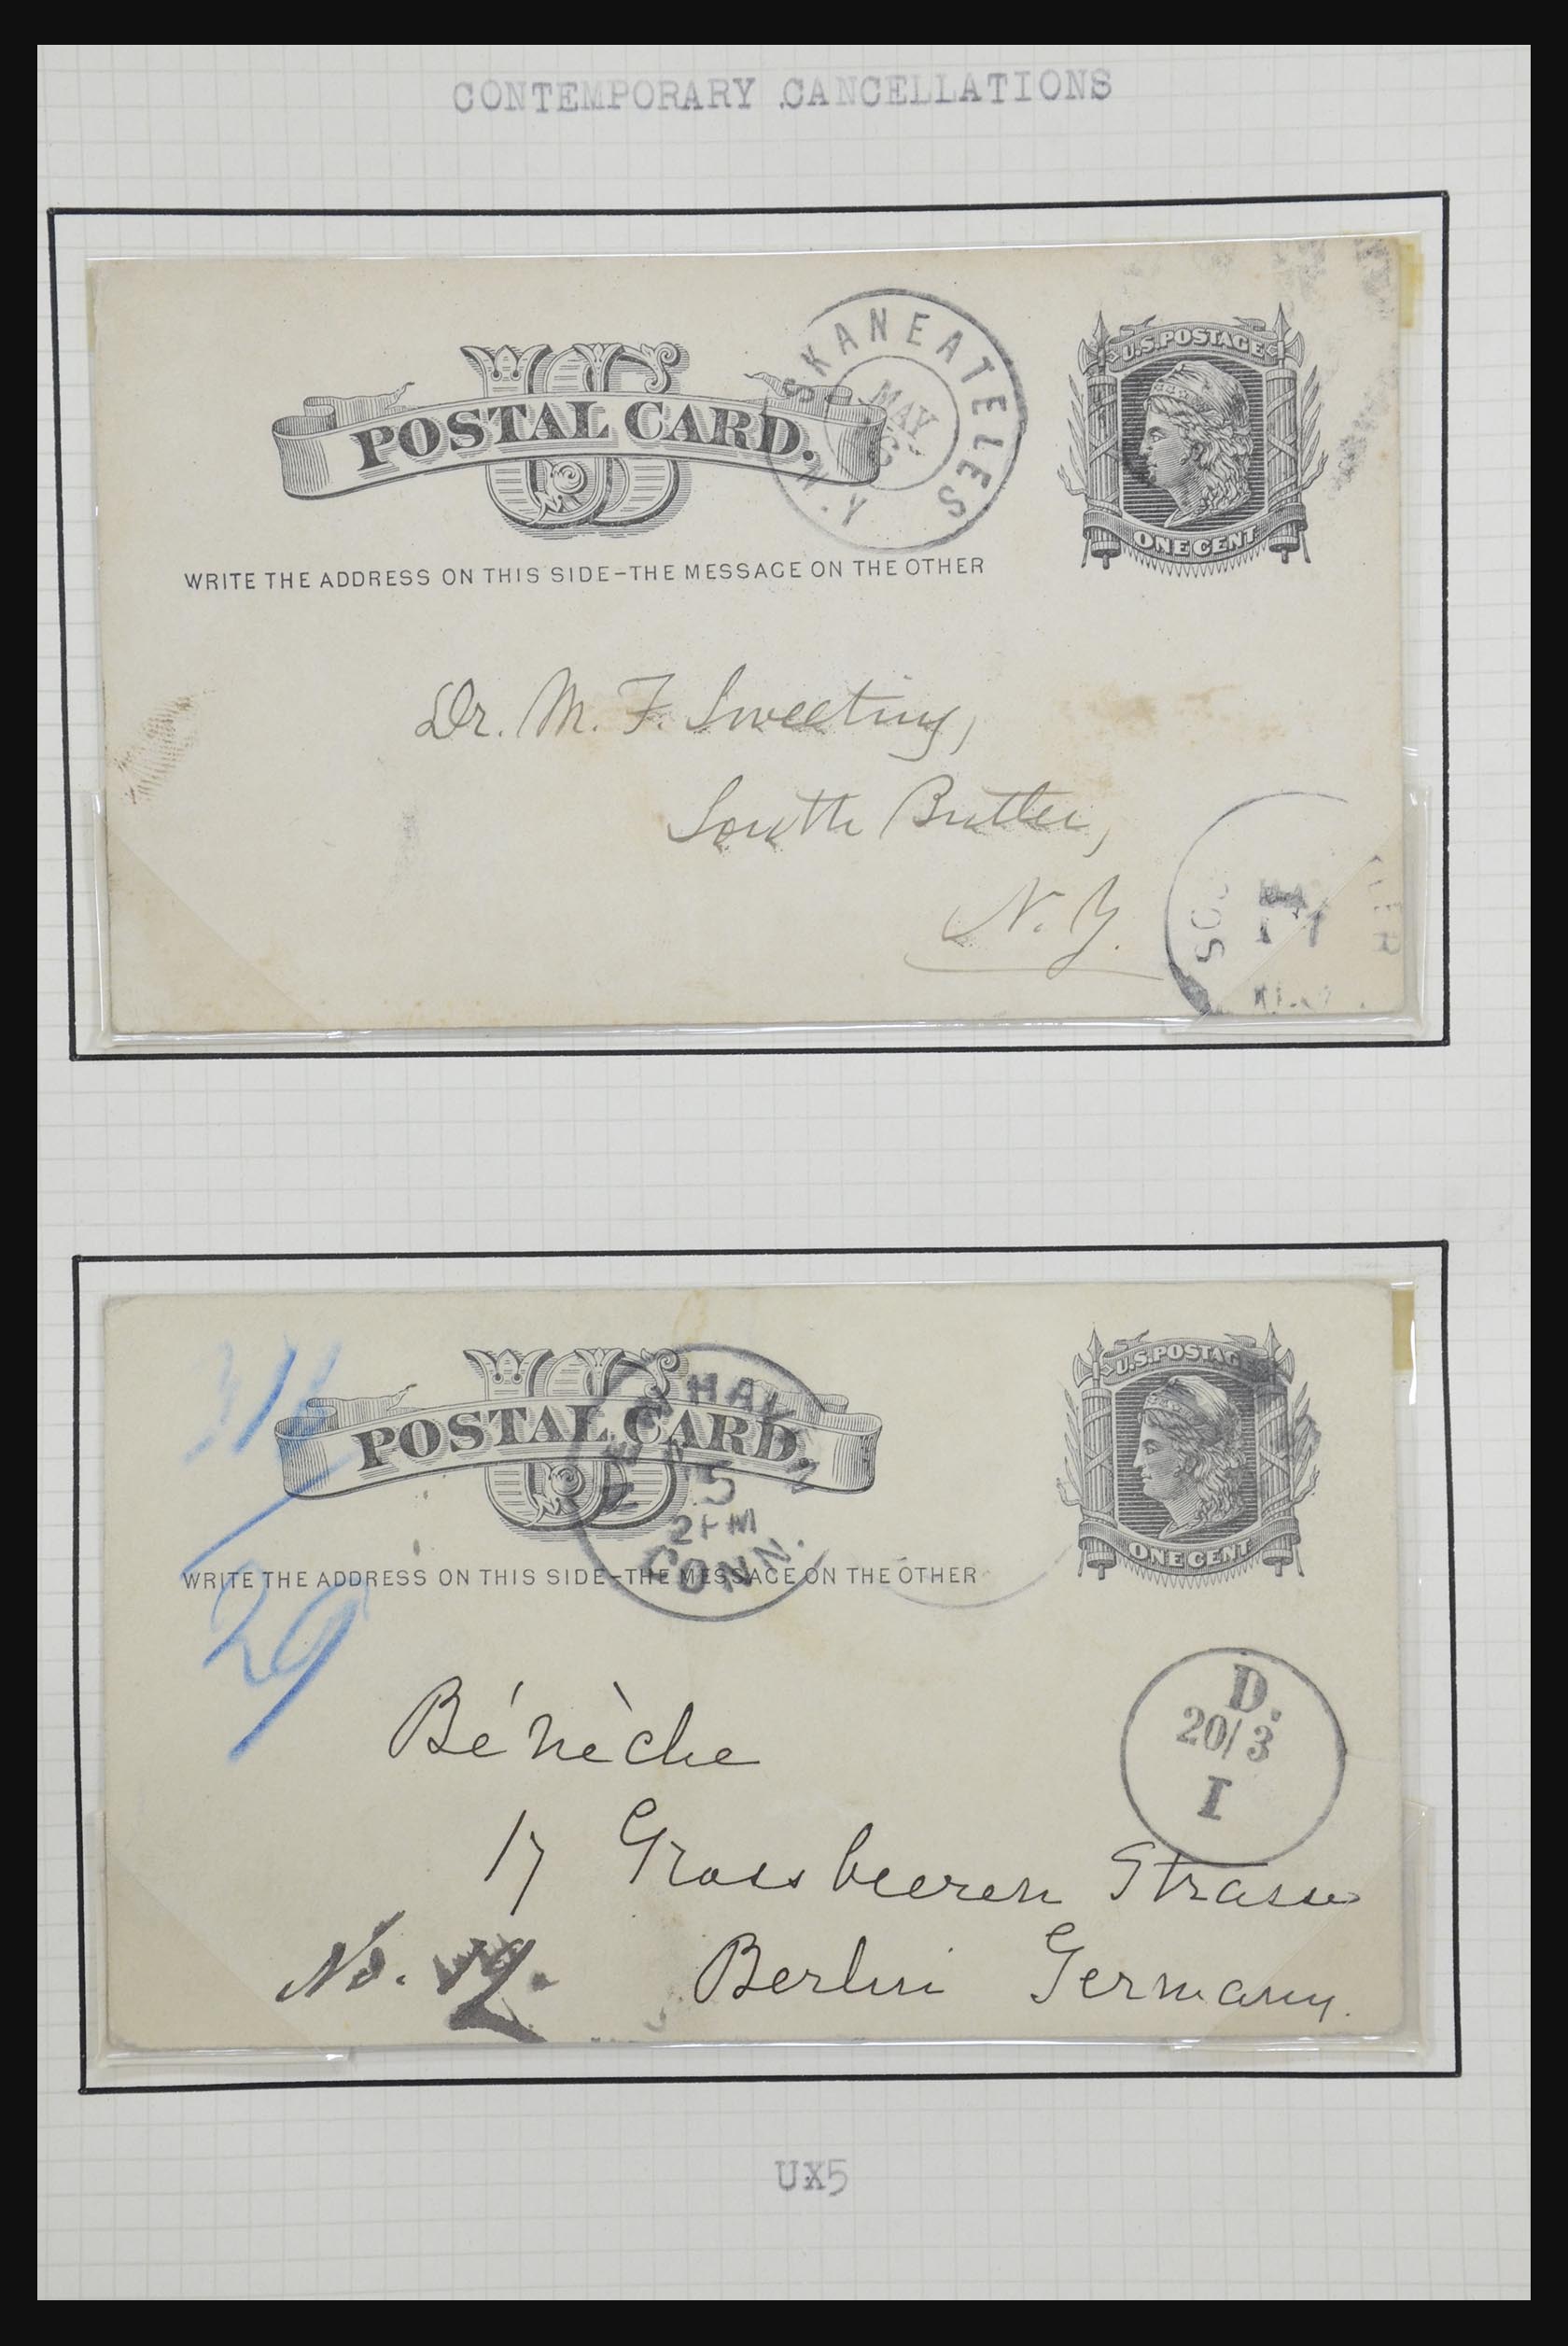 32209 044 - 32209 USA postal cards 1873-1950.